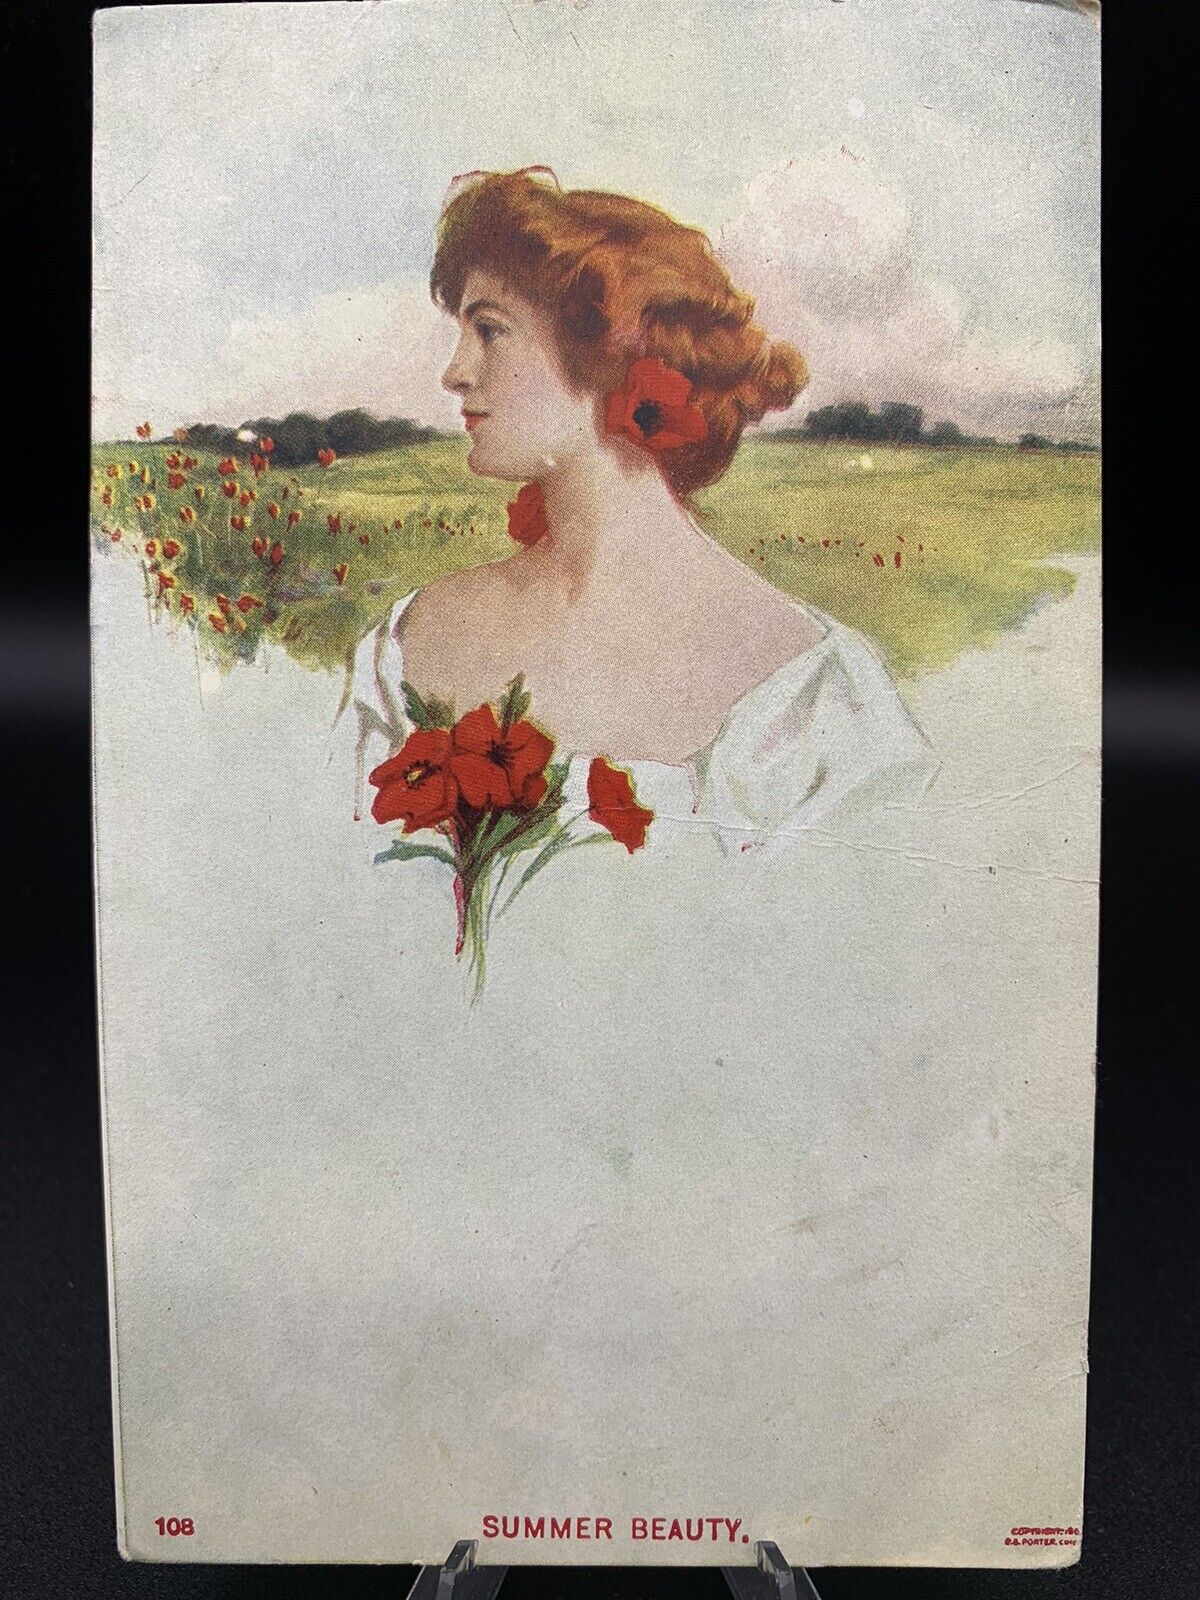 108 SUMMER BEAUTY. - Antique Postcard, S. S. Porter, unused, rare